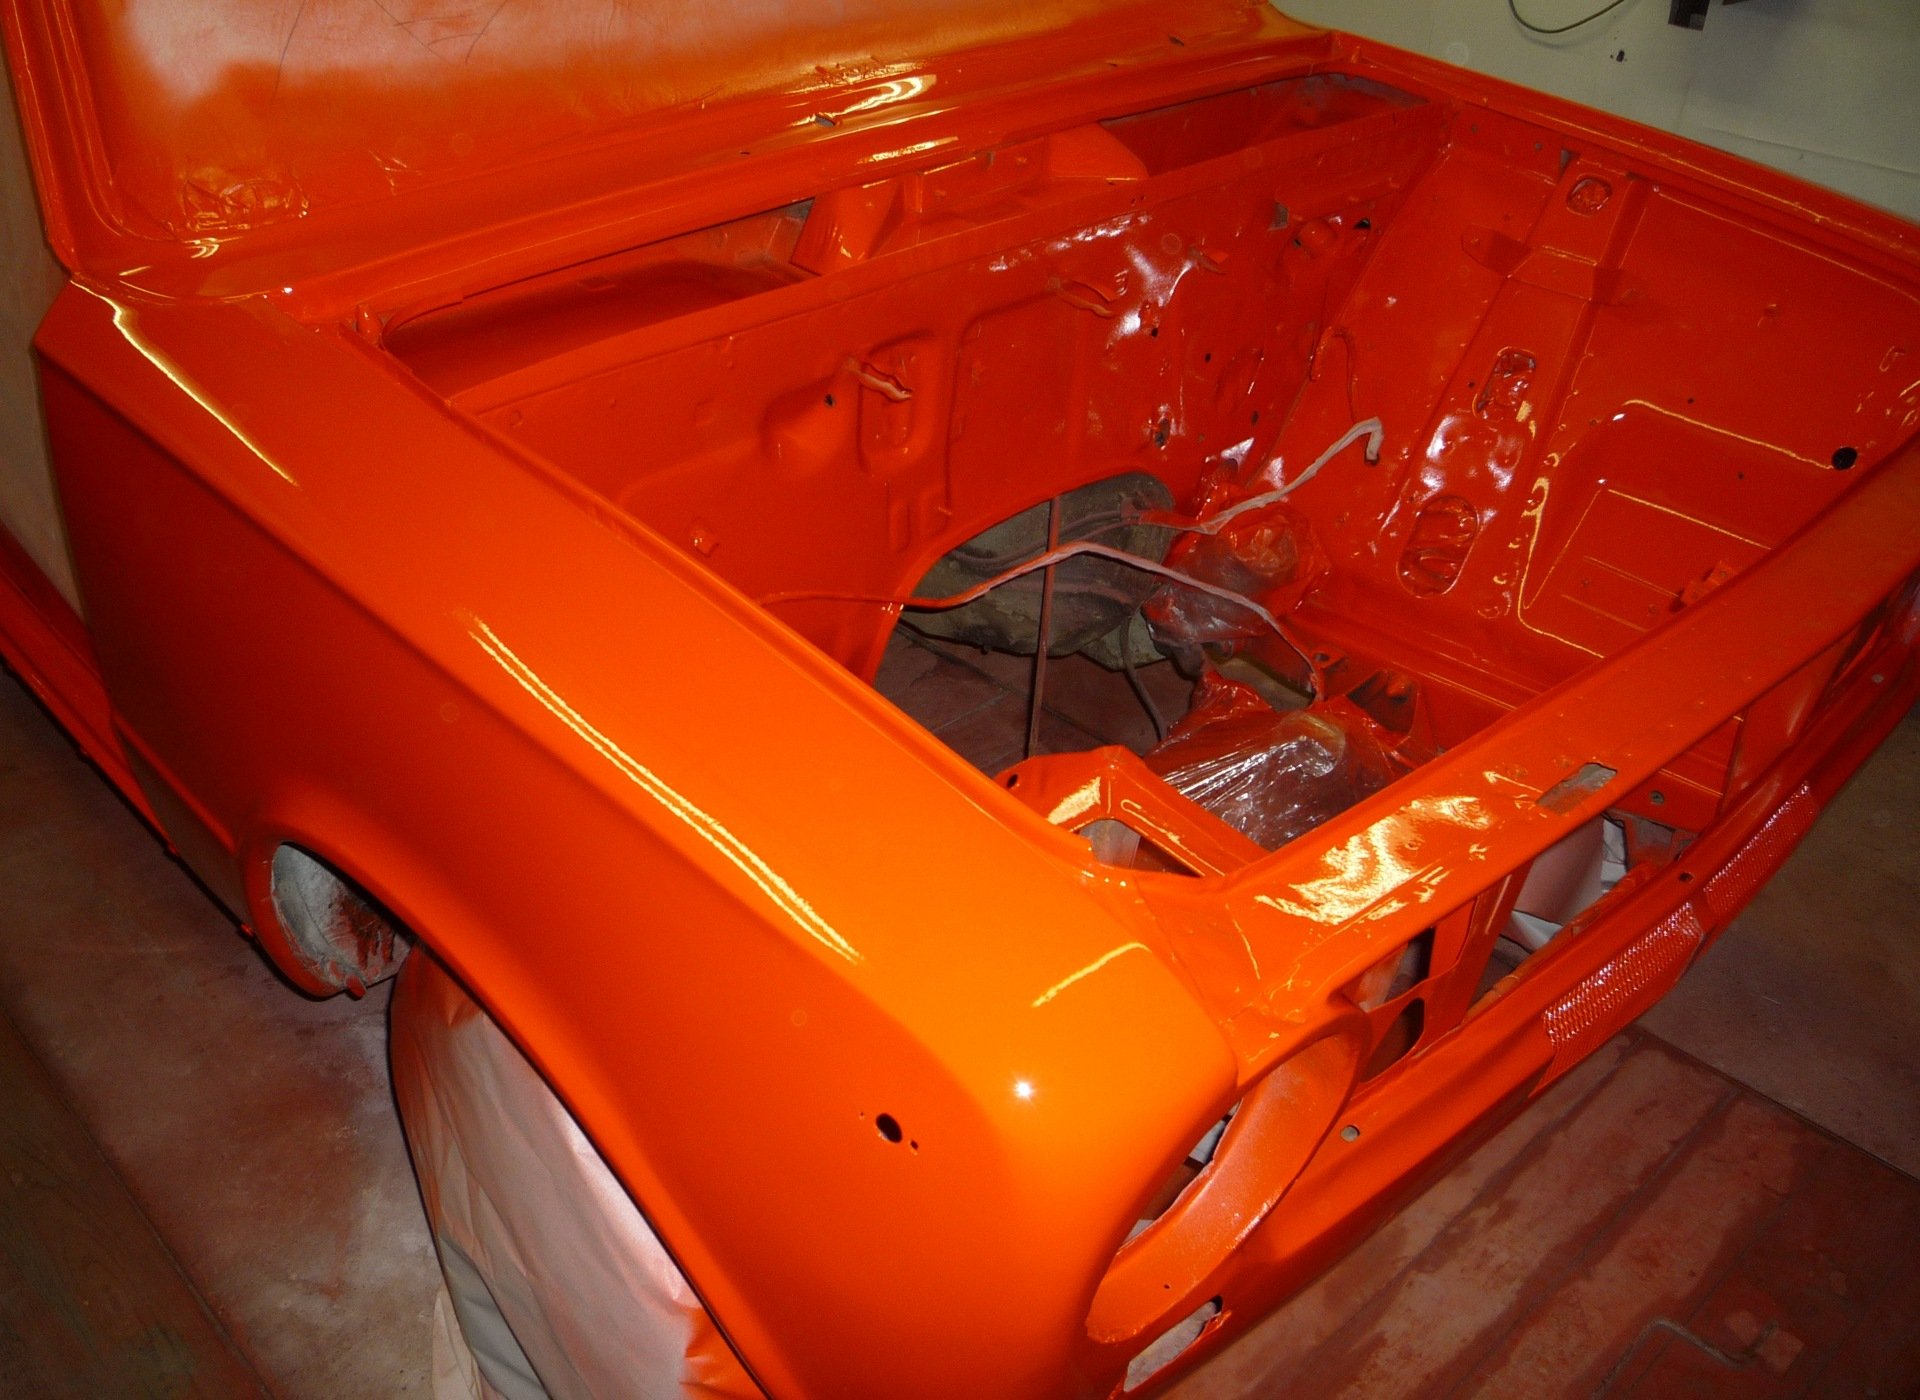 ВАЗ 2101 оранжевый металлик. ВАЗ 2107 оранжевый металлик. ВАЗ 2101 краска. ВАЗ 2106 оранжевый металлик.